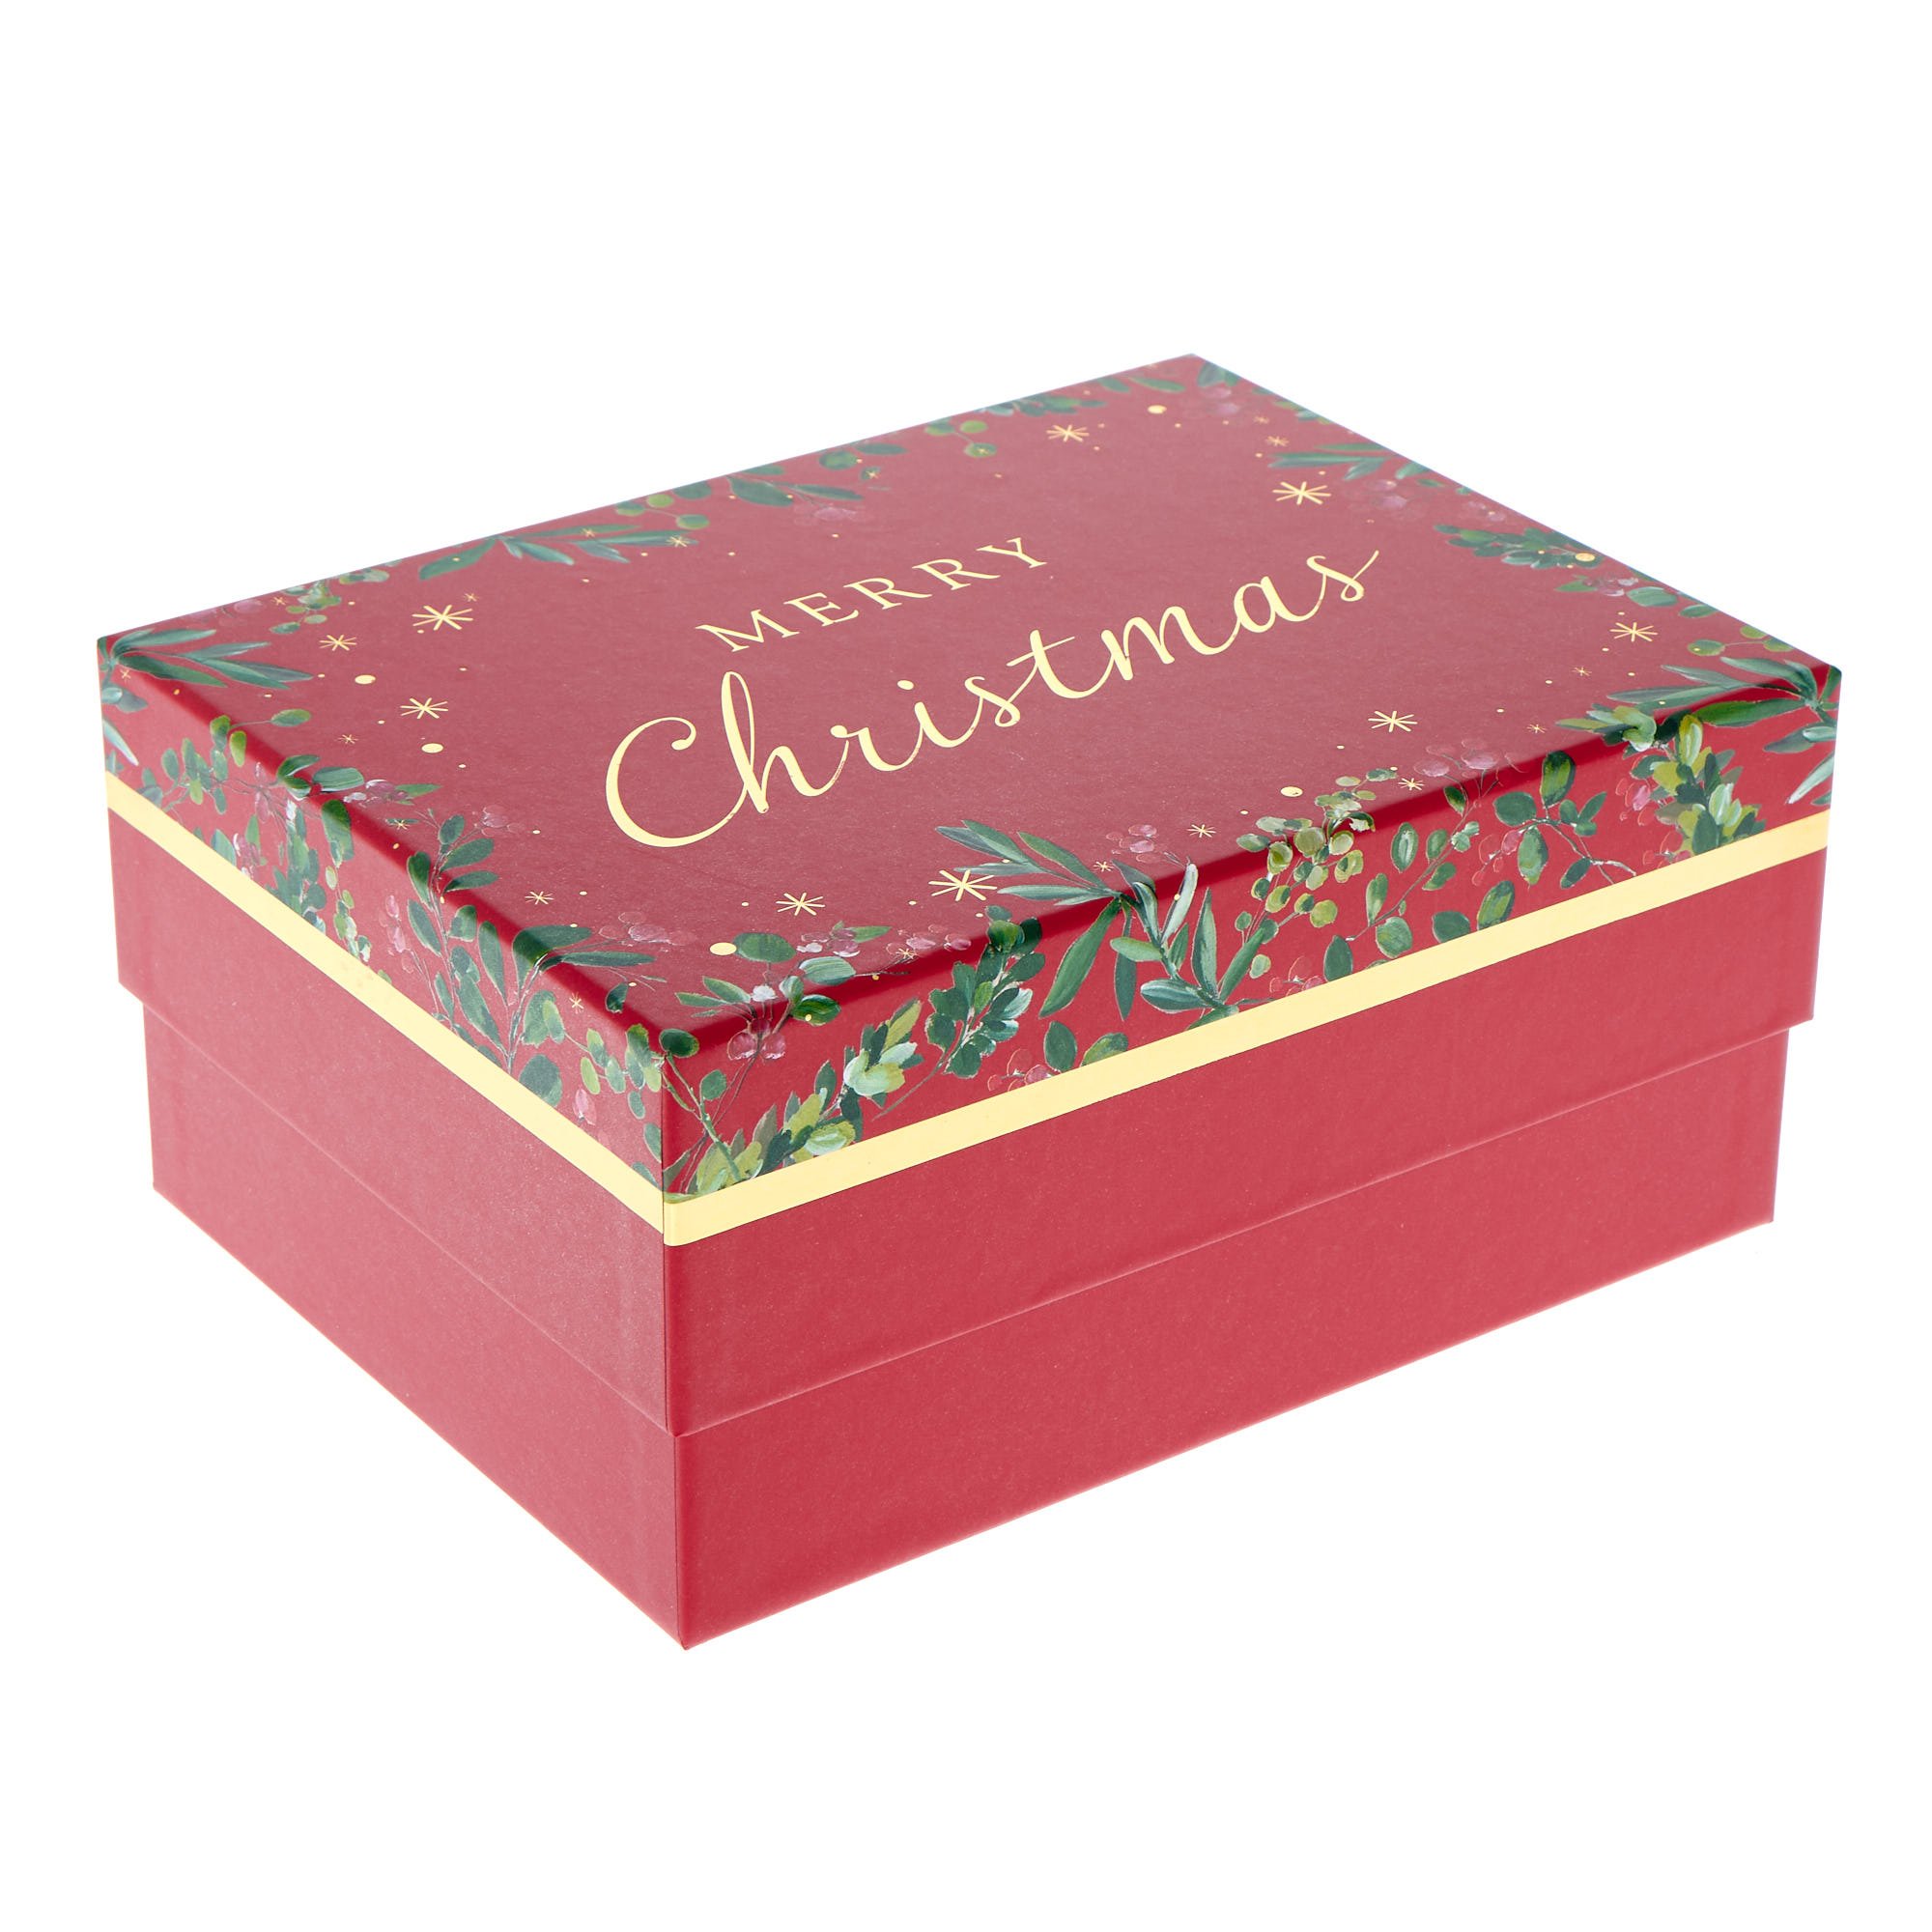 Merry Christmas Foliage Gift Boxes - Set of 3